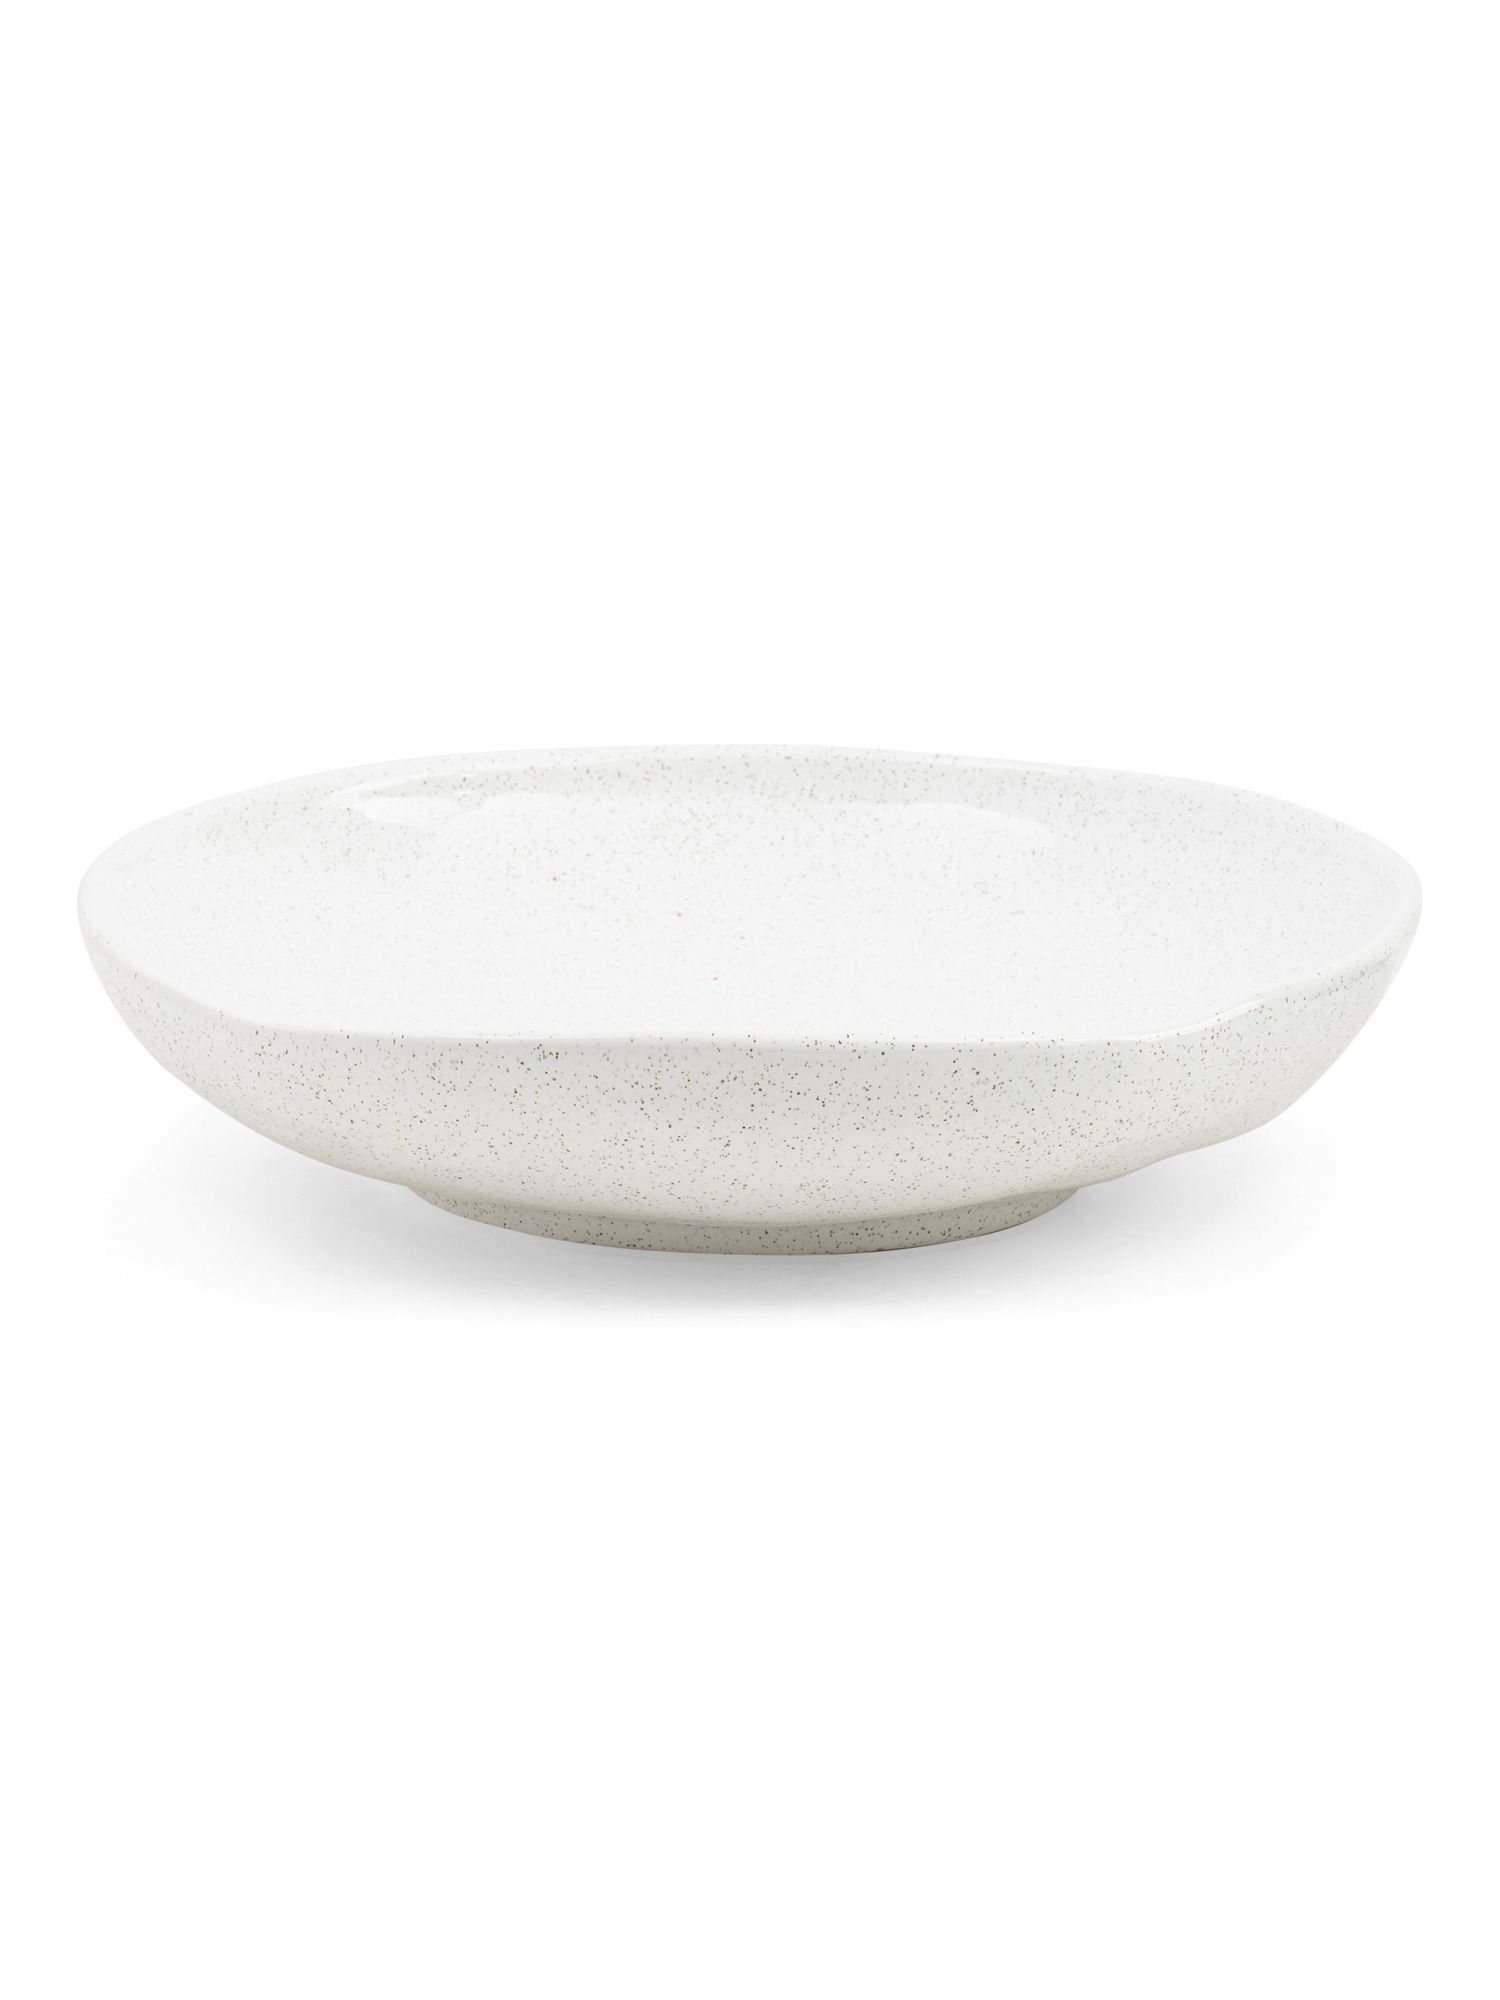 Made In Portugal Ceramic Decorative Bowl | TJ Maxx